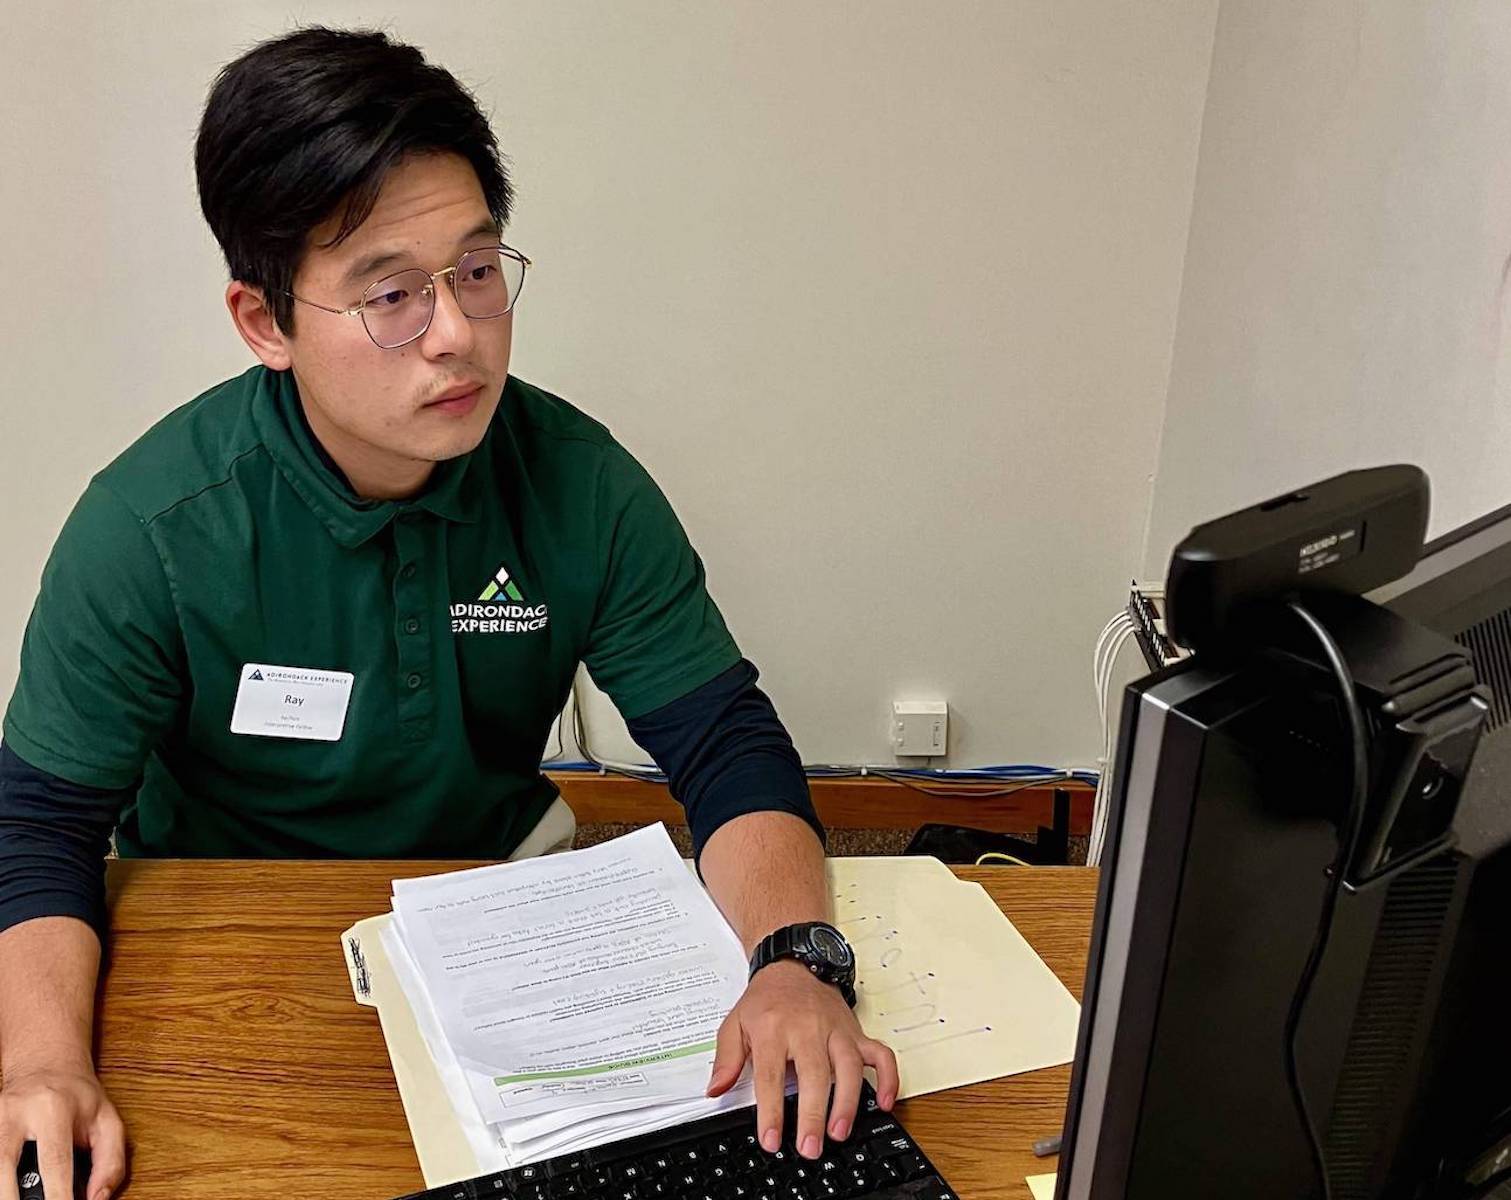 Zhang works at a computer at the Adirondack Experience.